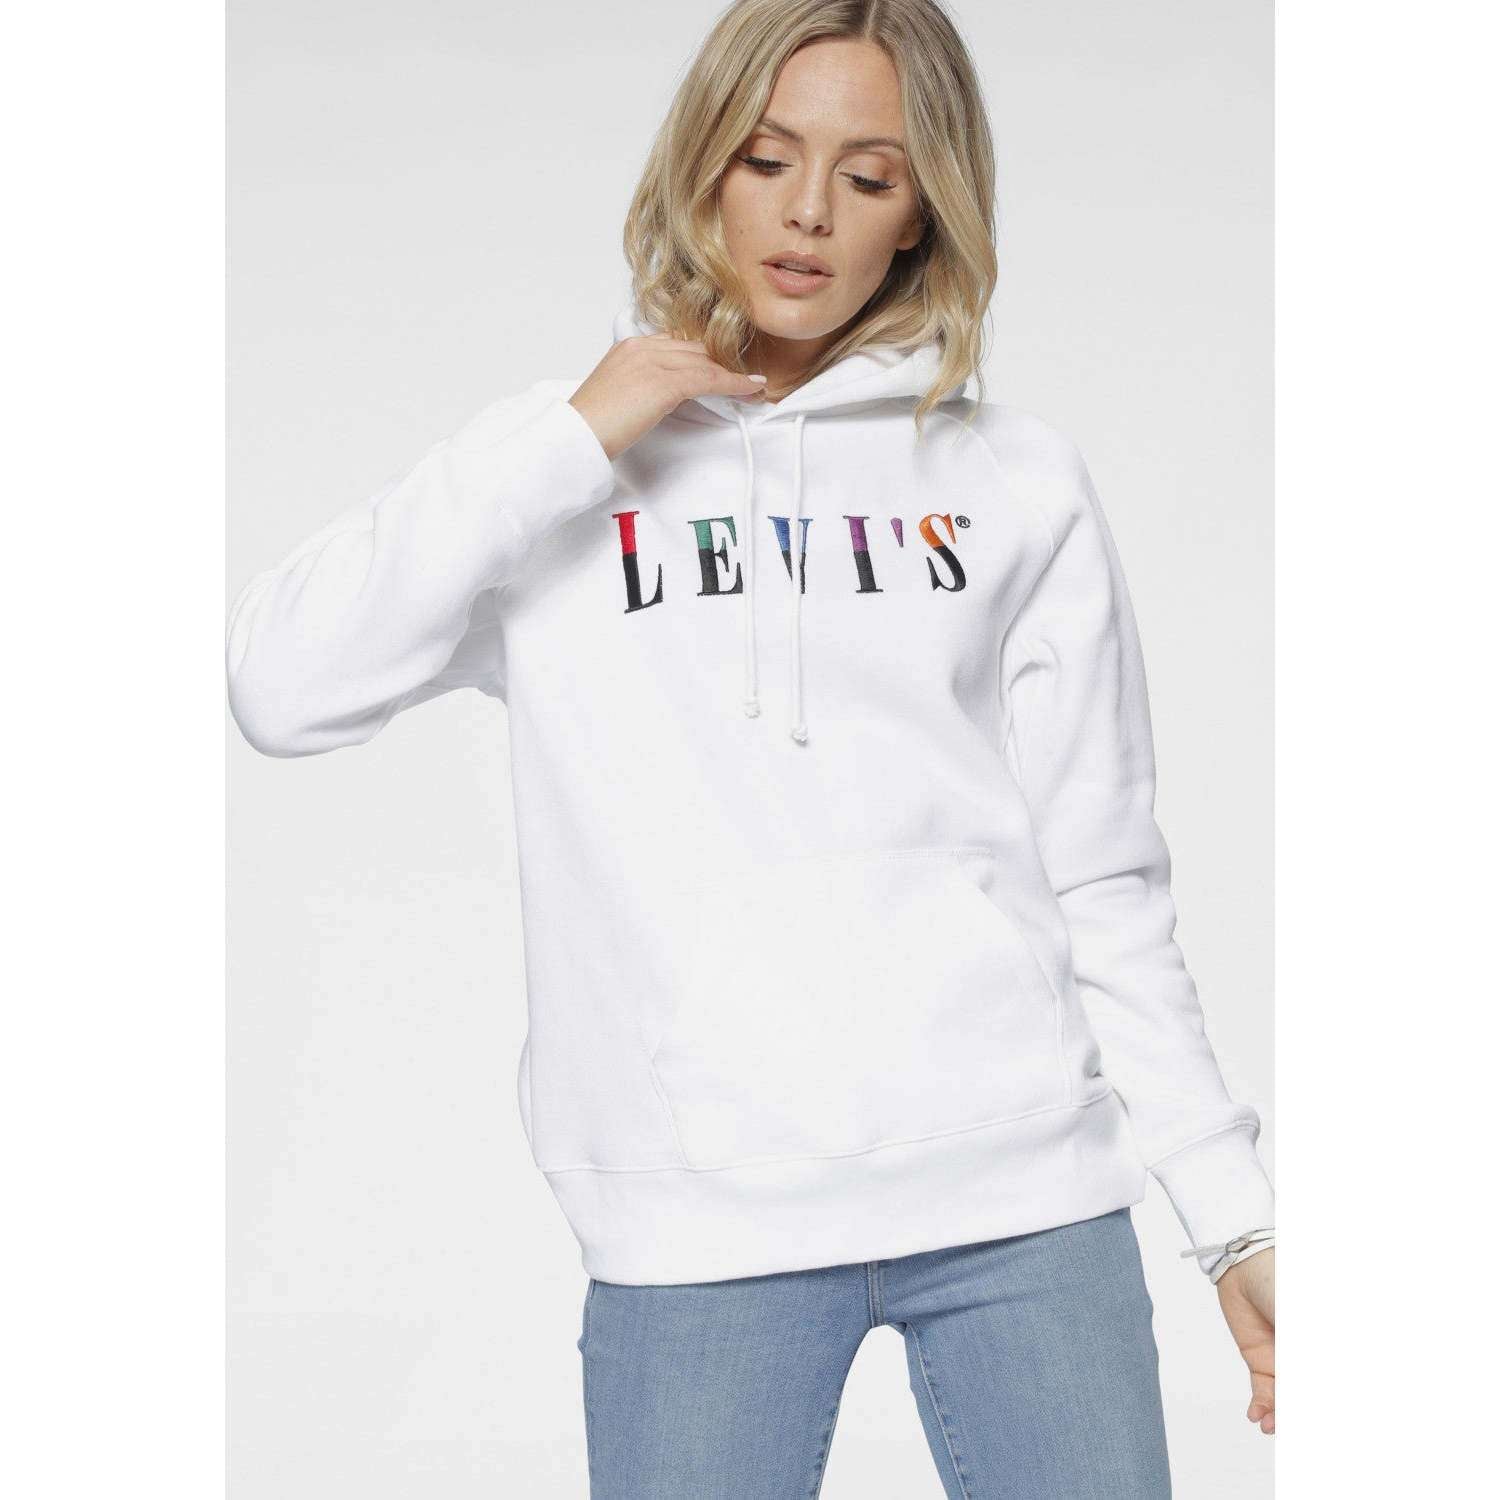 Levi's Donna Felpa Manica Lunga Sweatshirt Stampa Color White